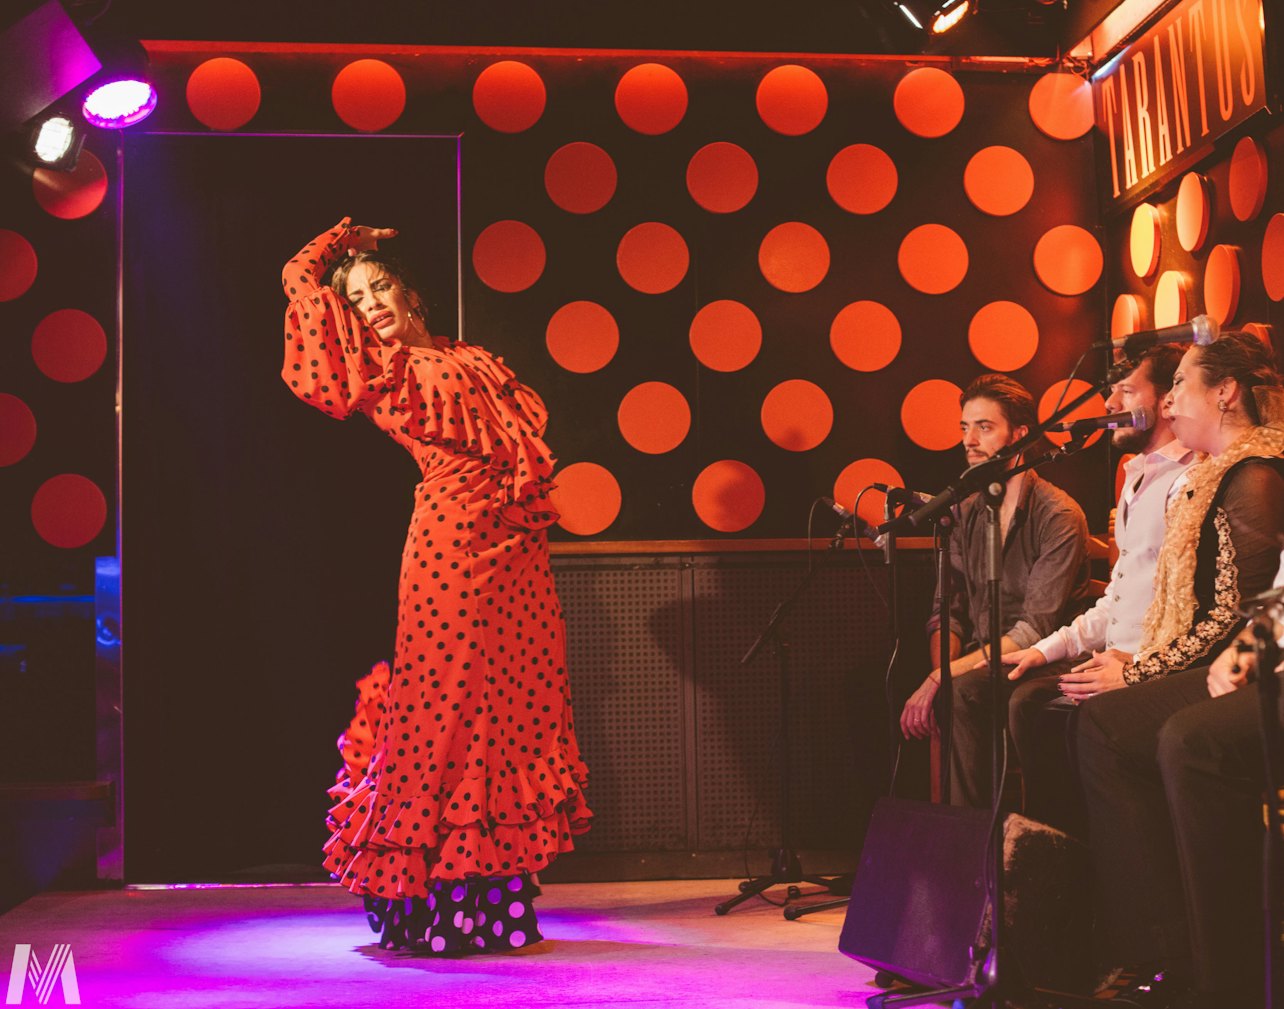 Tarantos Flamenco Show - Accommodations in Barcelona